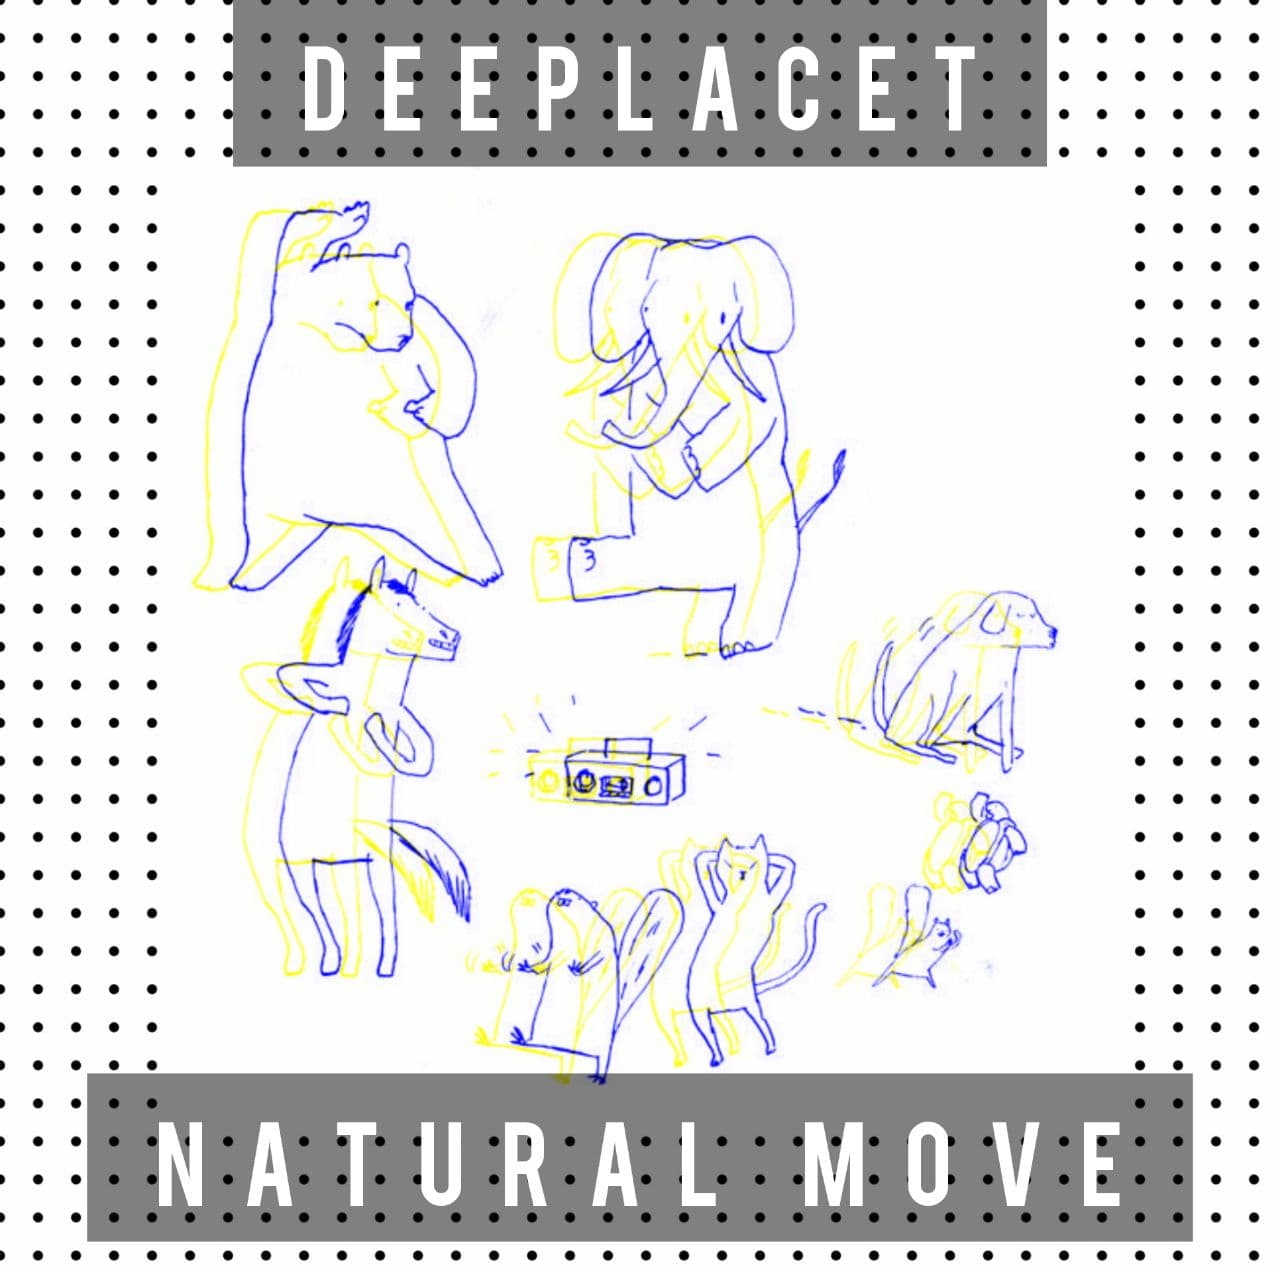 Deeplacet - Natural move (mix)